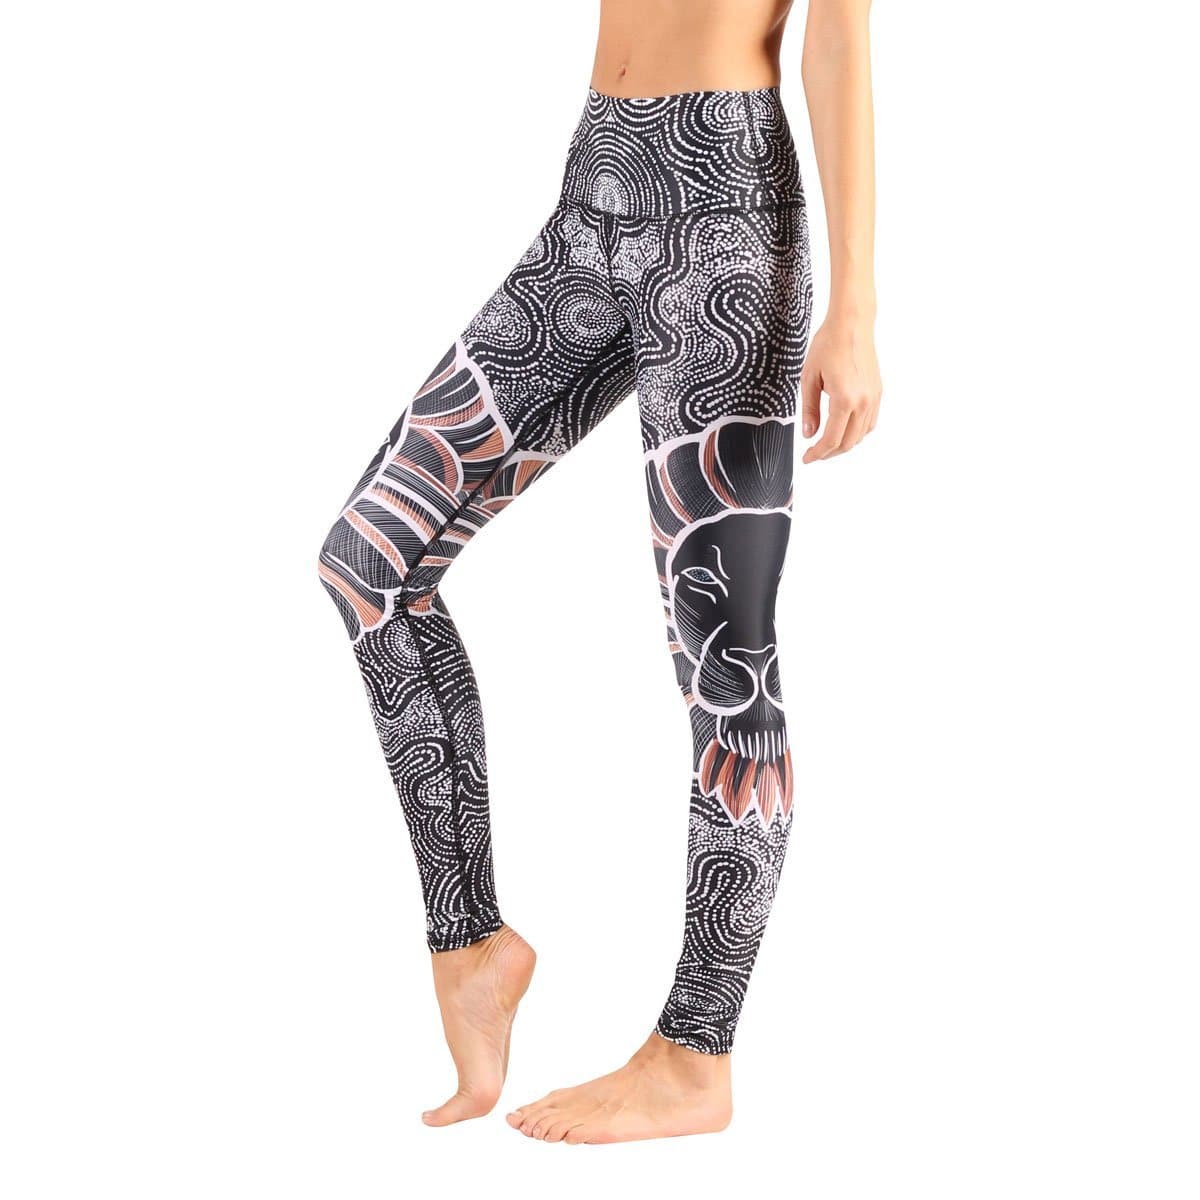 Beeloved Blackout Printed Yoga Legging